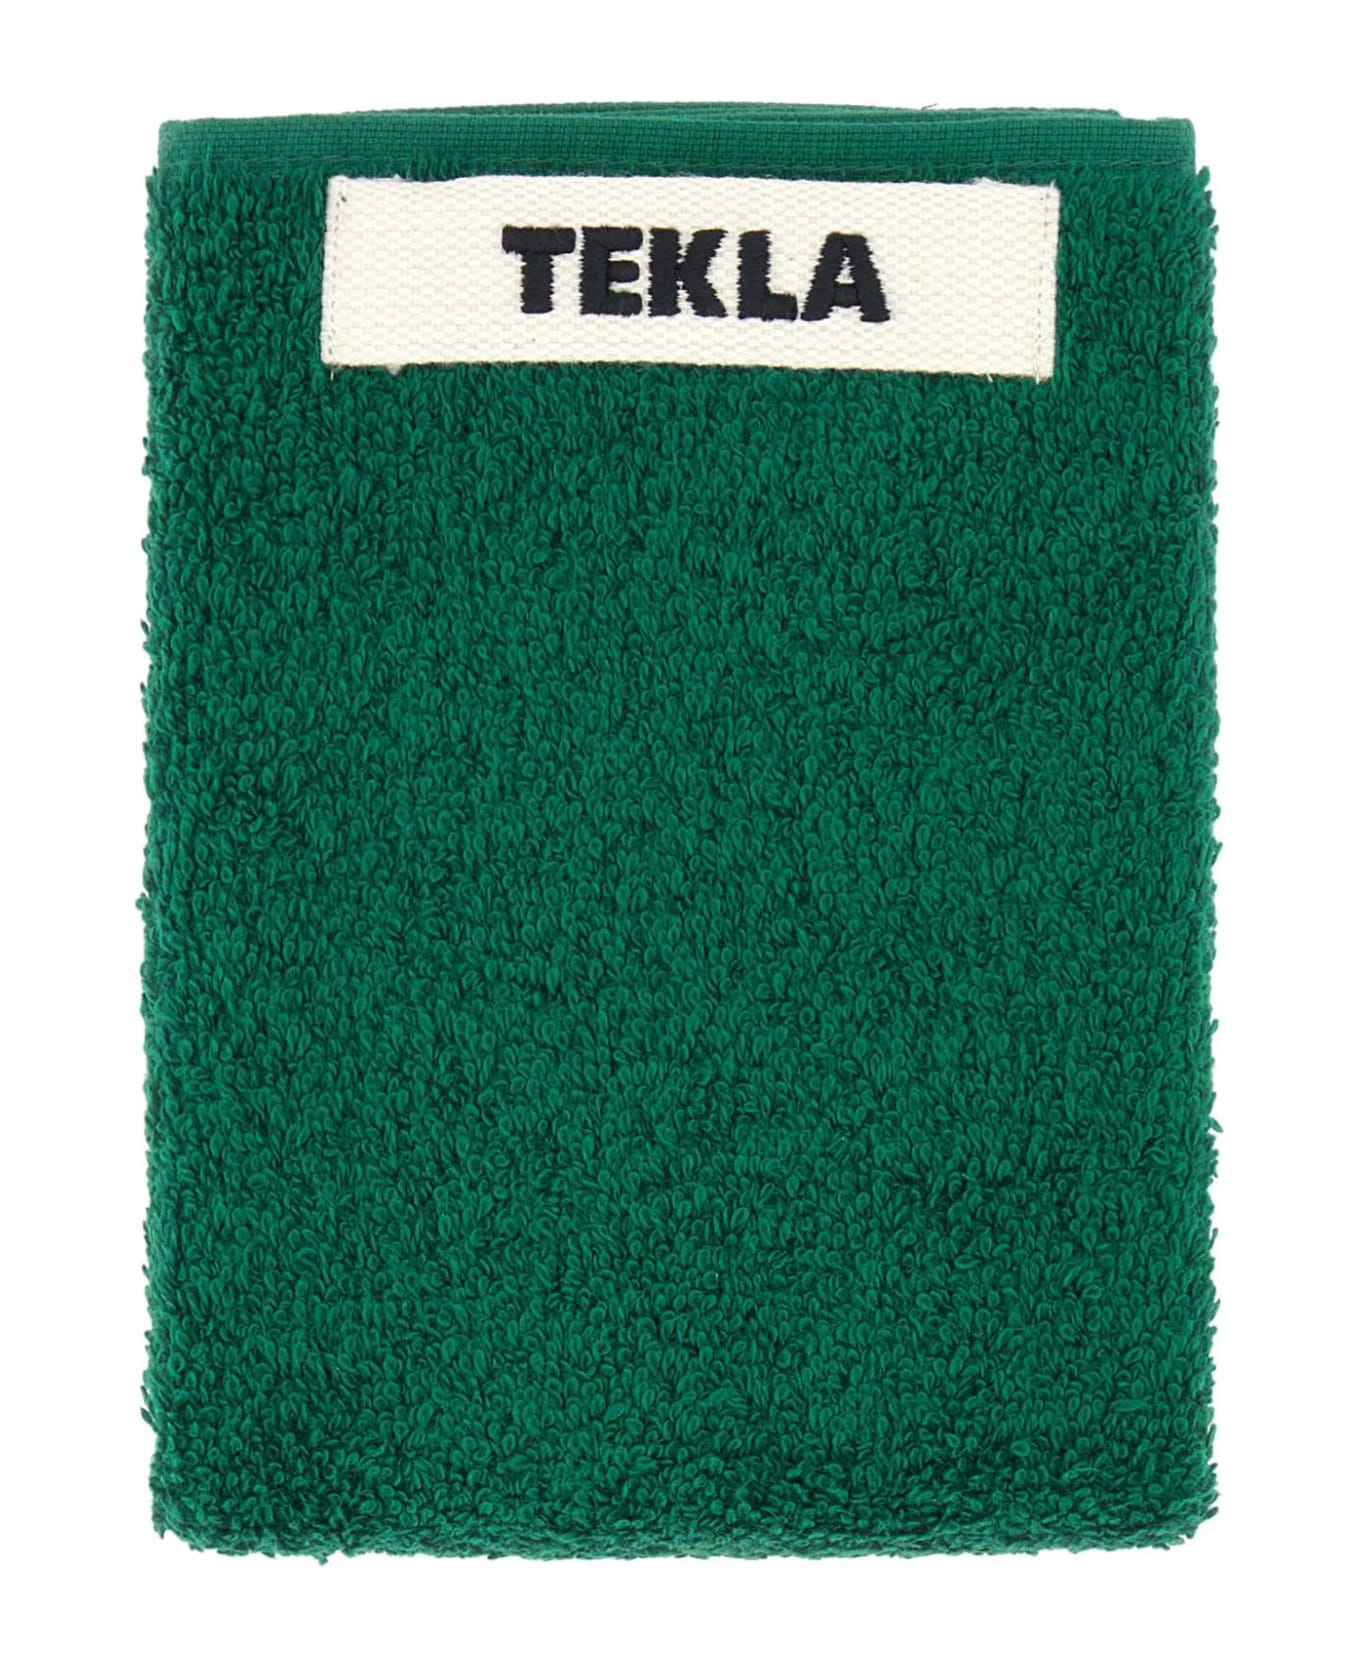 Tekla Green Terry Towel - TEALGREEN タオル